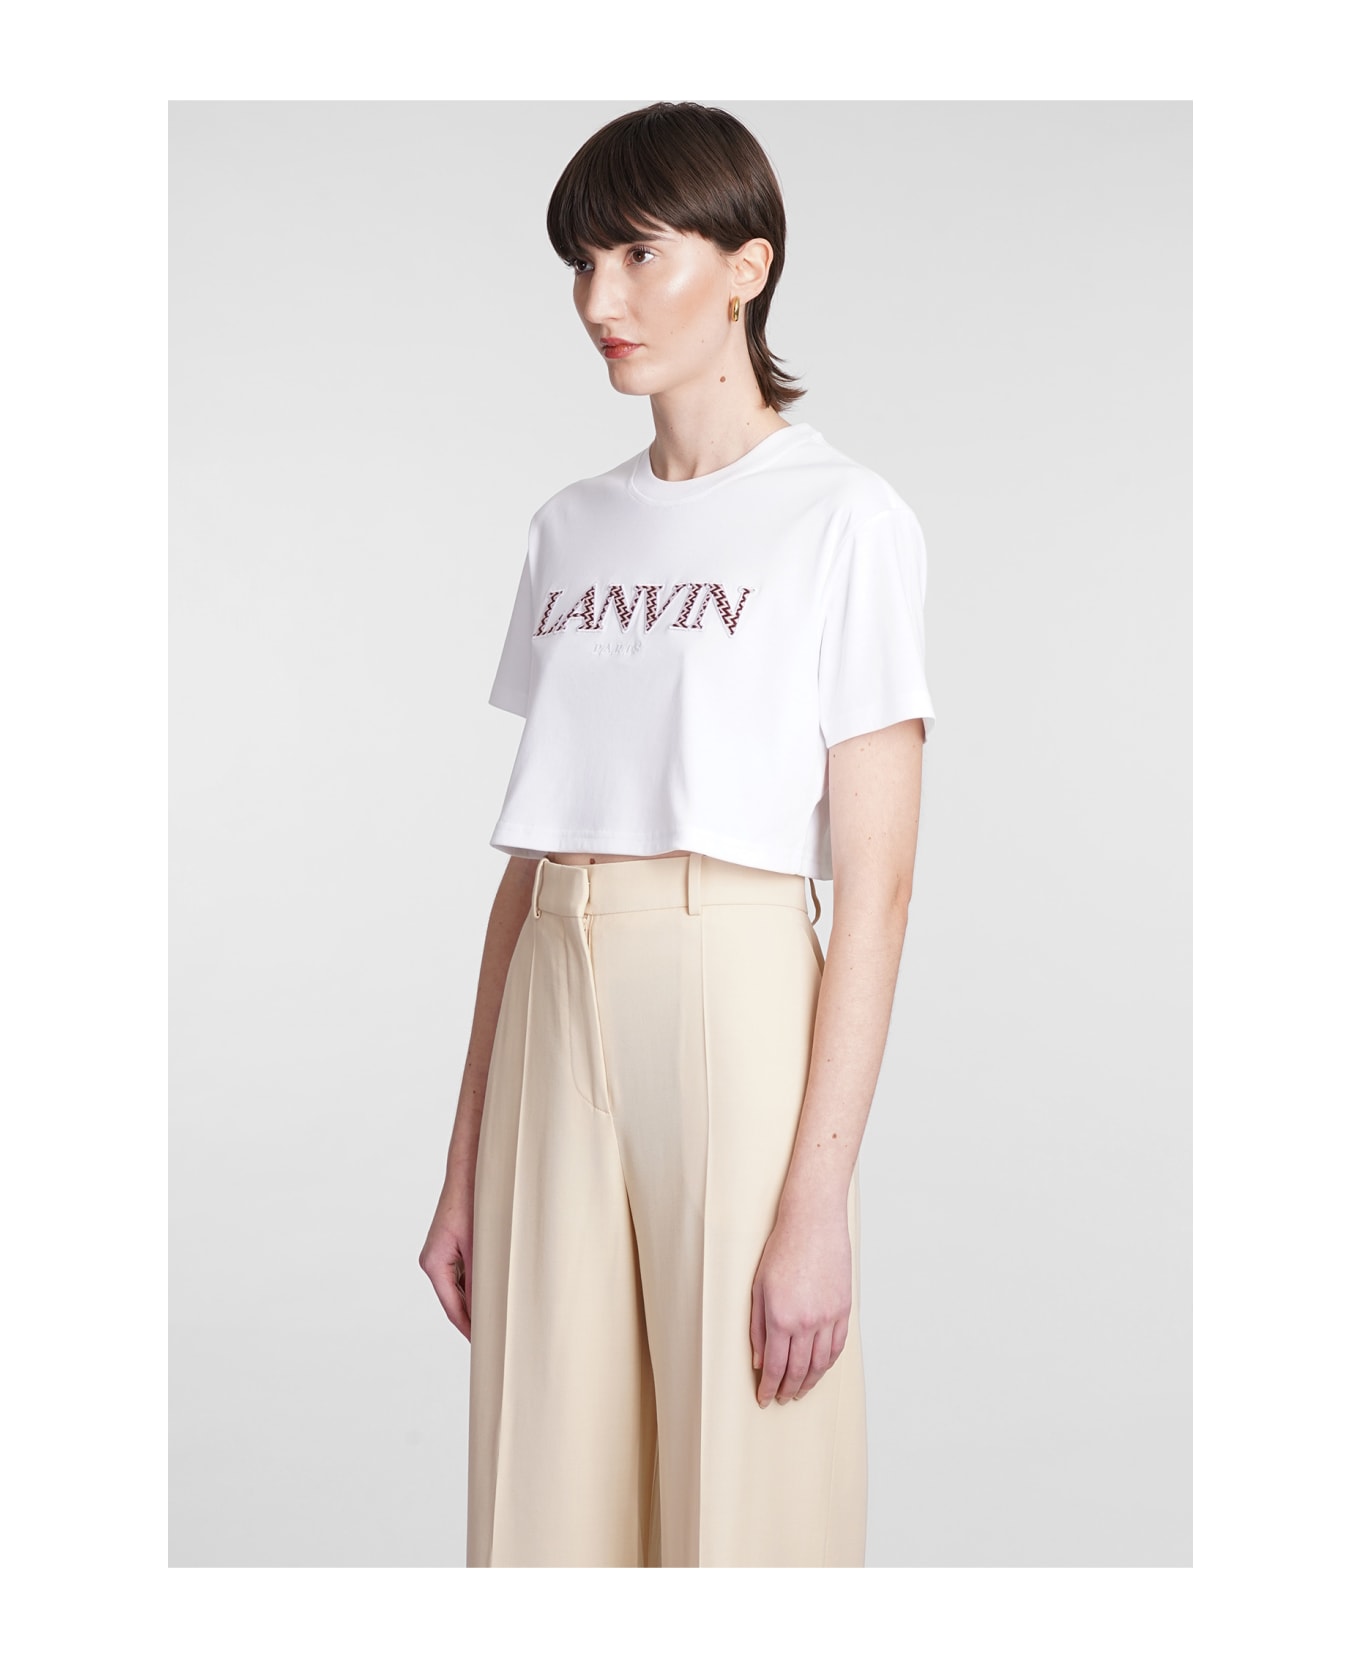 Lanvin T-shirt In White Cotton - white Tシャツ